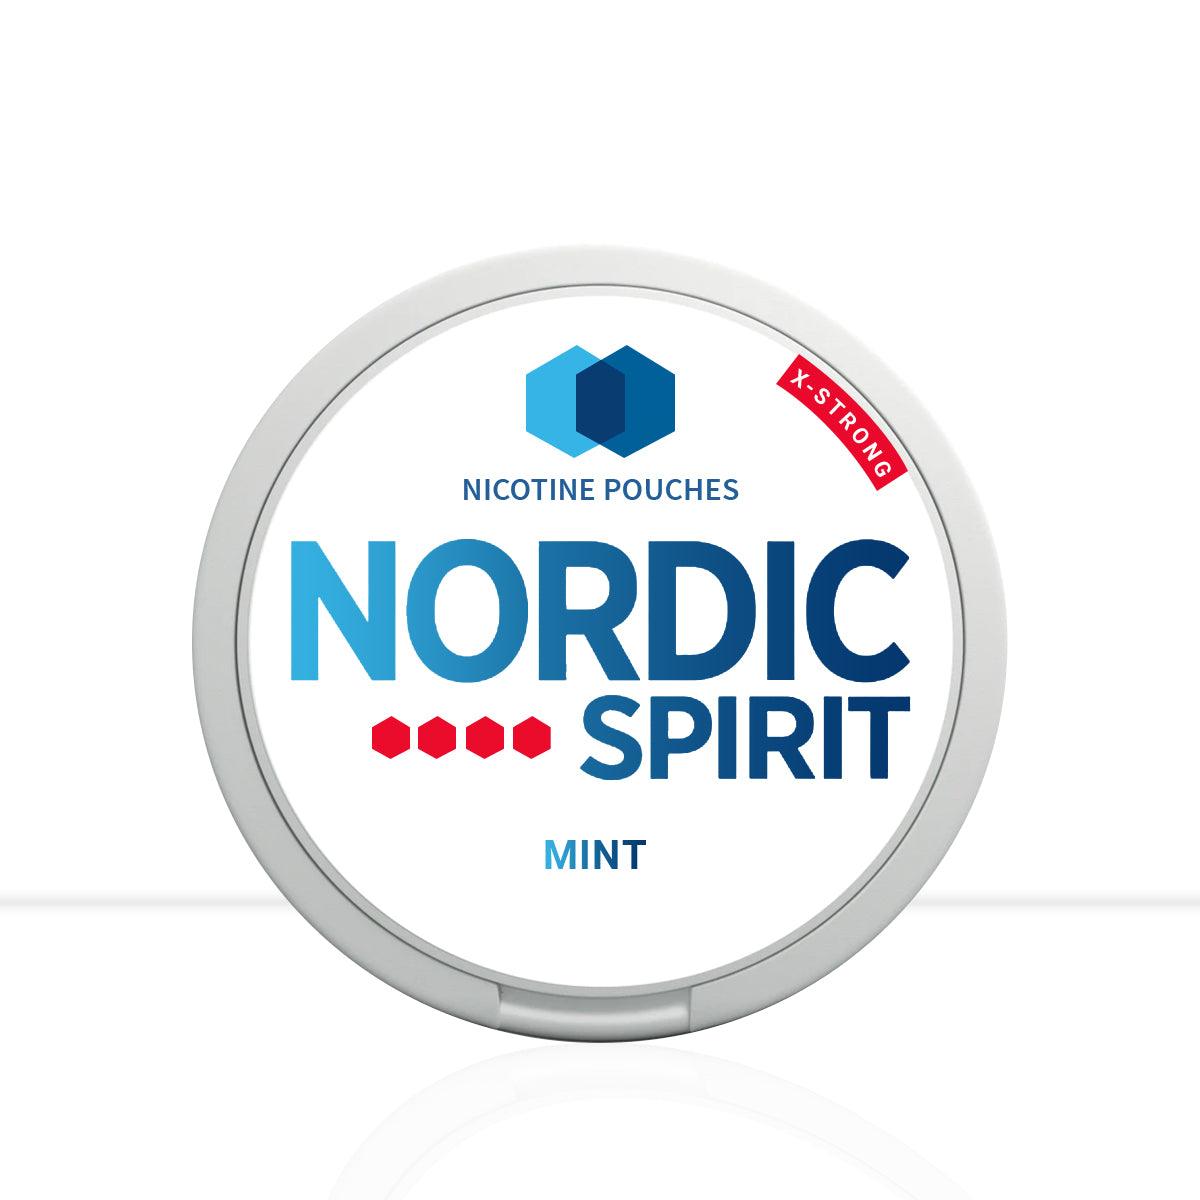 Nordic Spirit Nicotine Pouches Mint - Nordic Spirit Nicotine Pouches Mint - Accessories